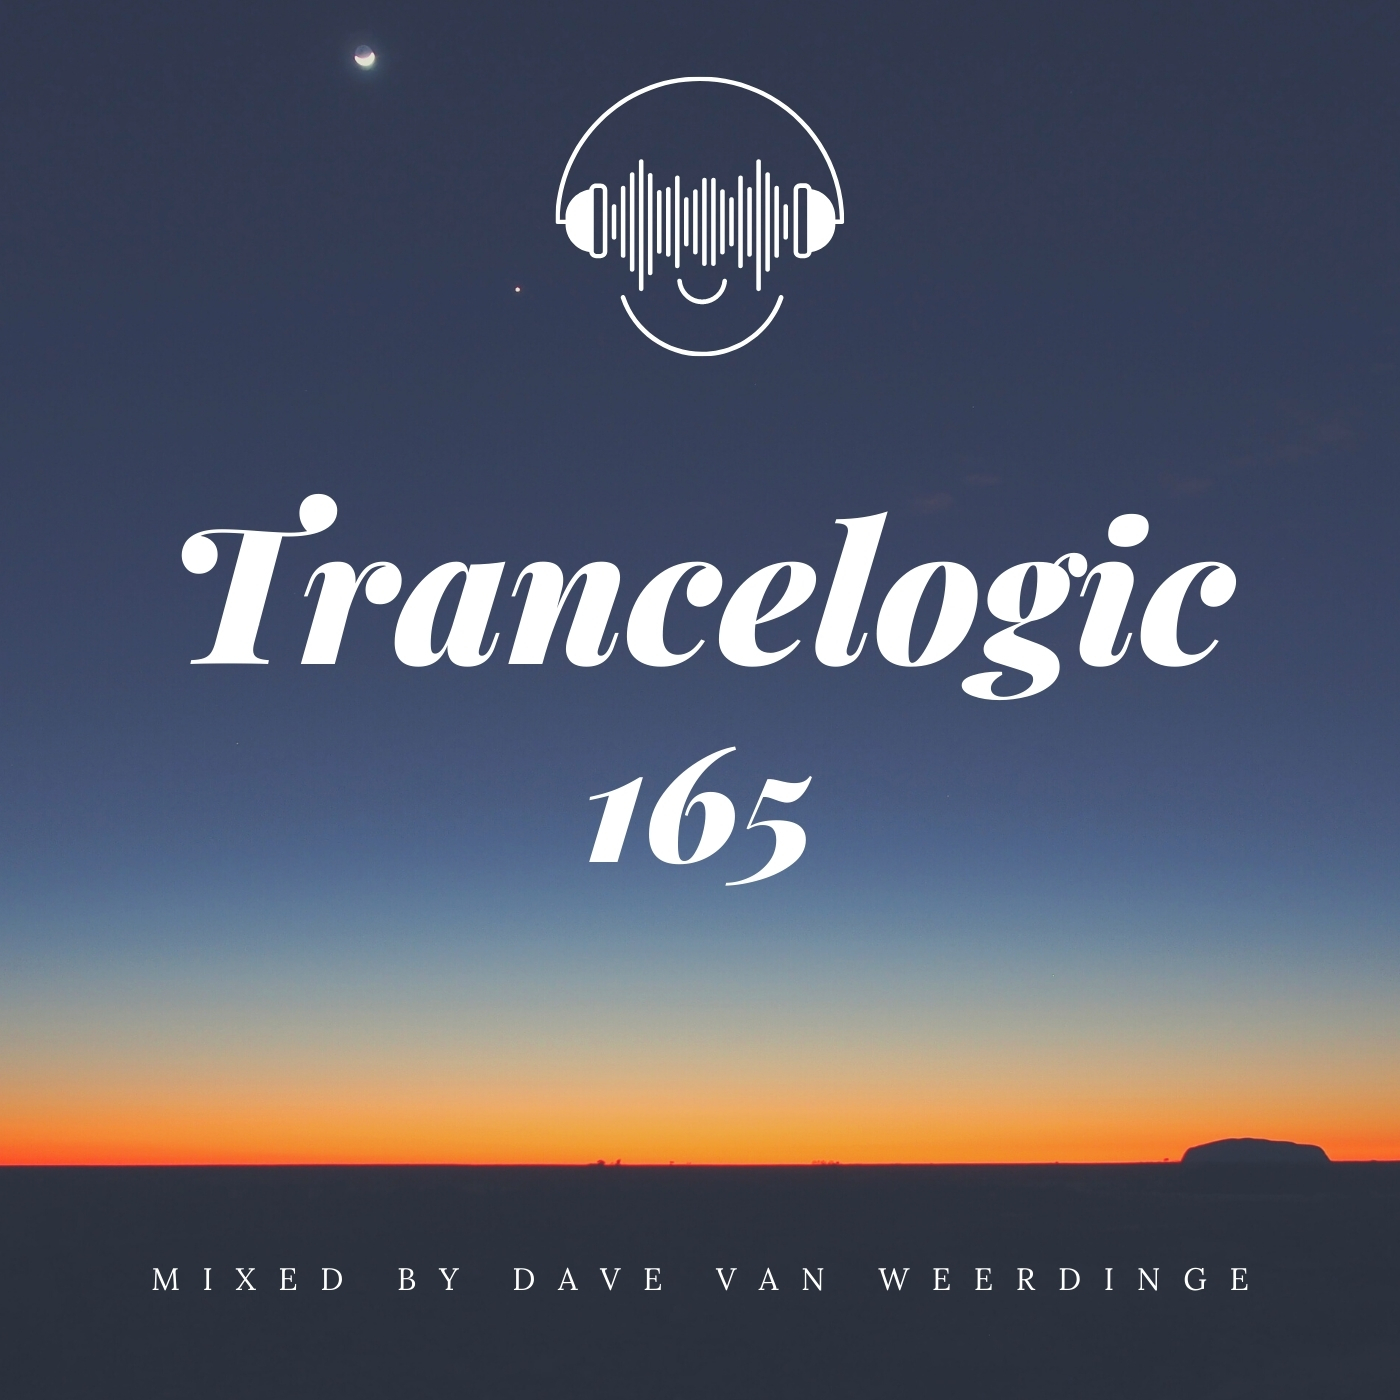 Trancelogic 165 by Dave van Weerdinge